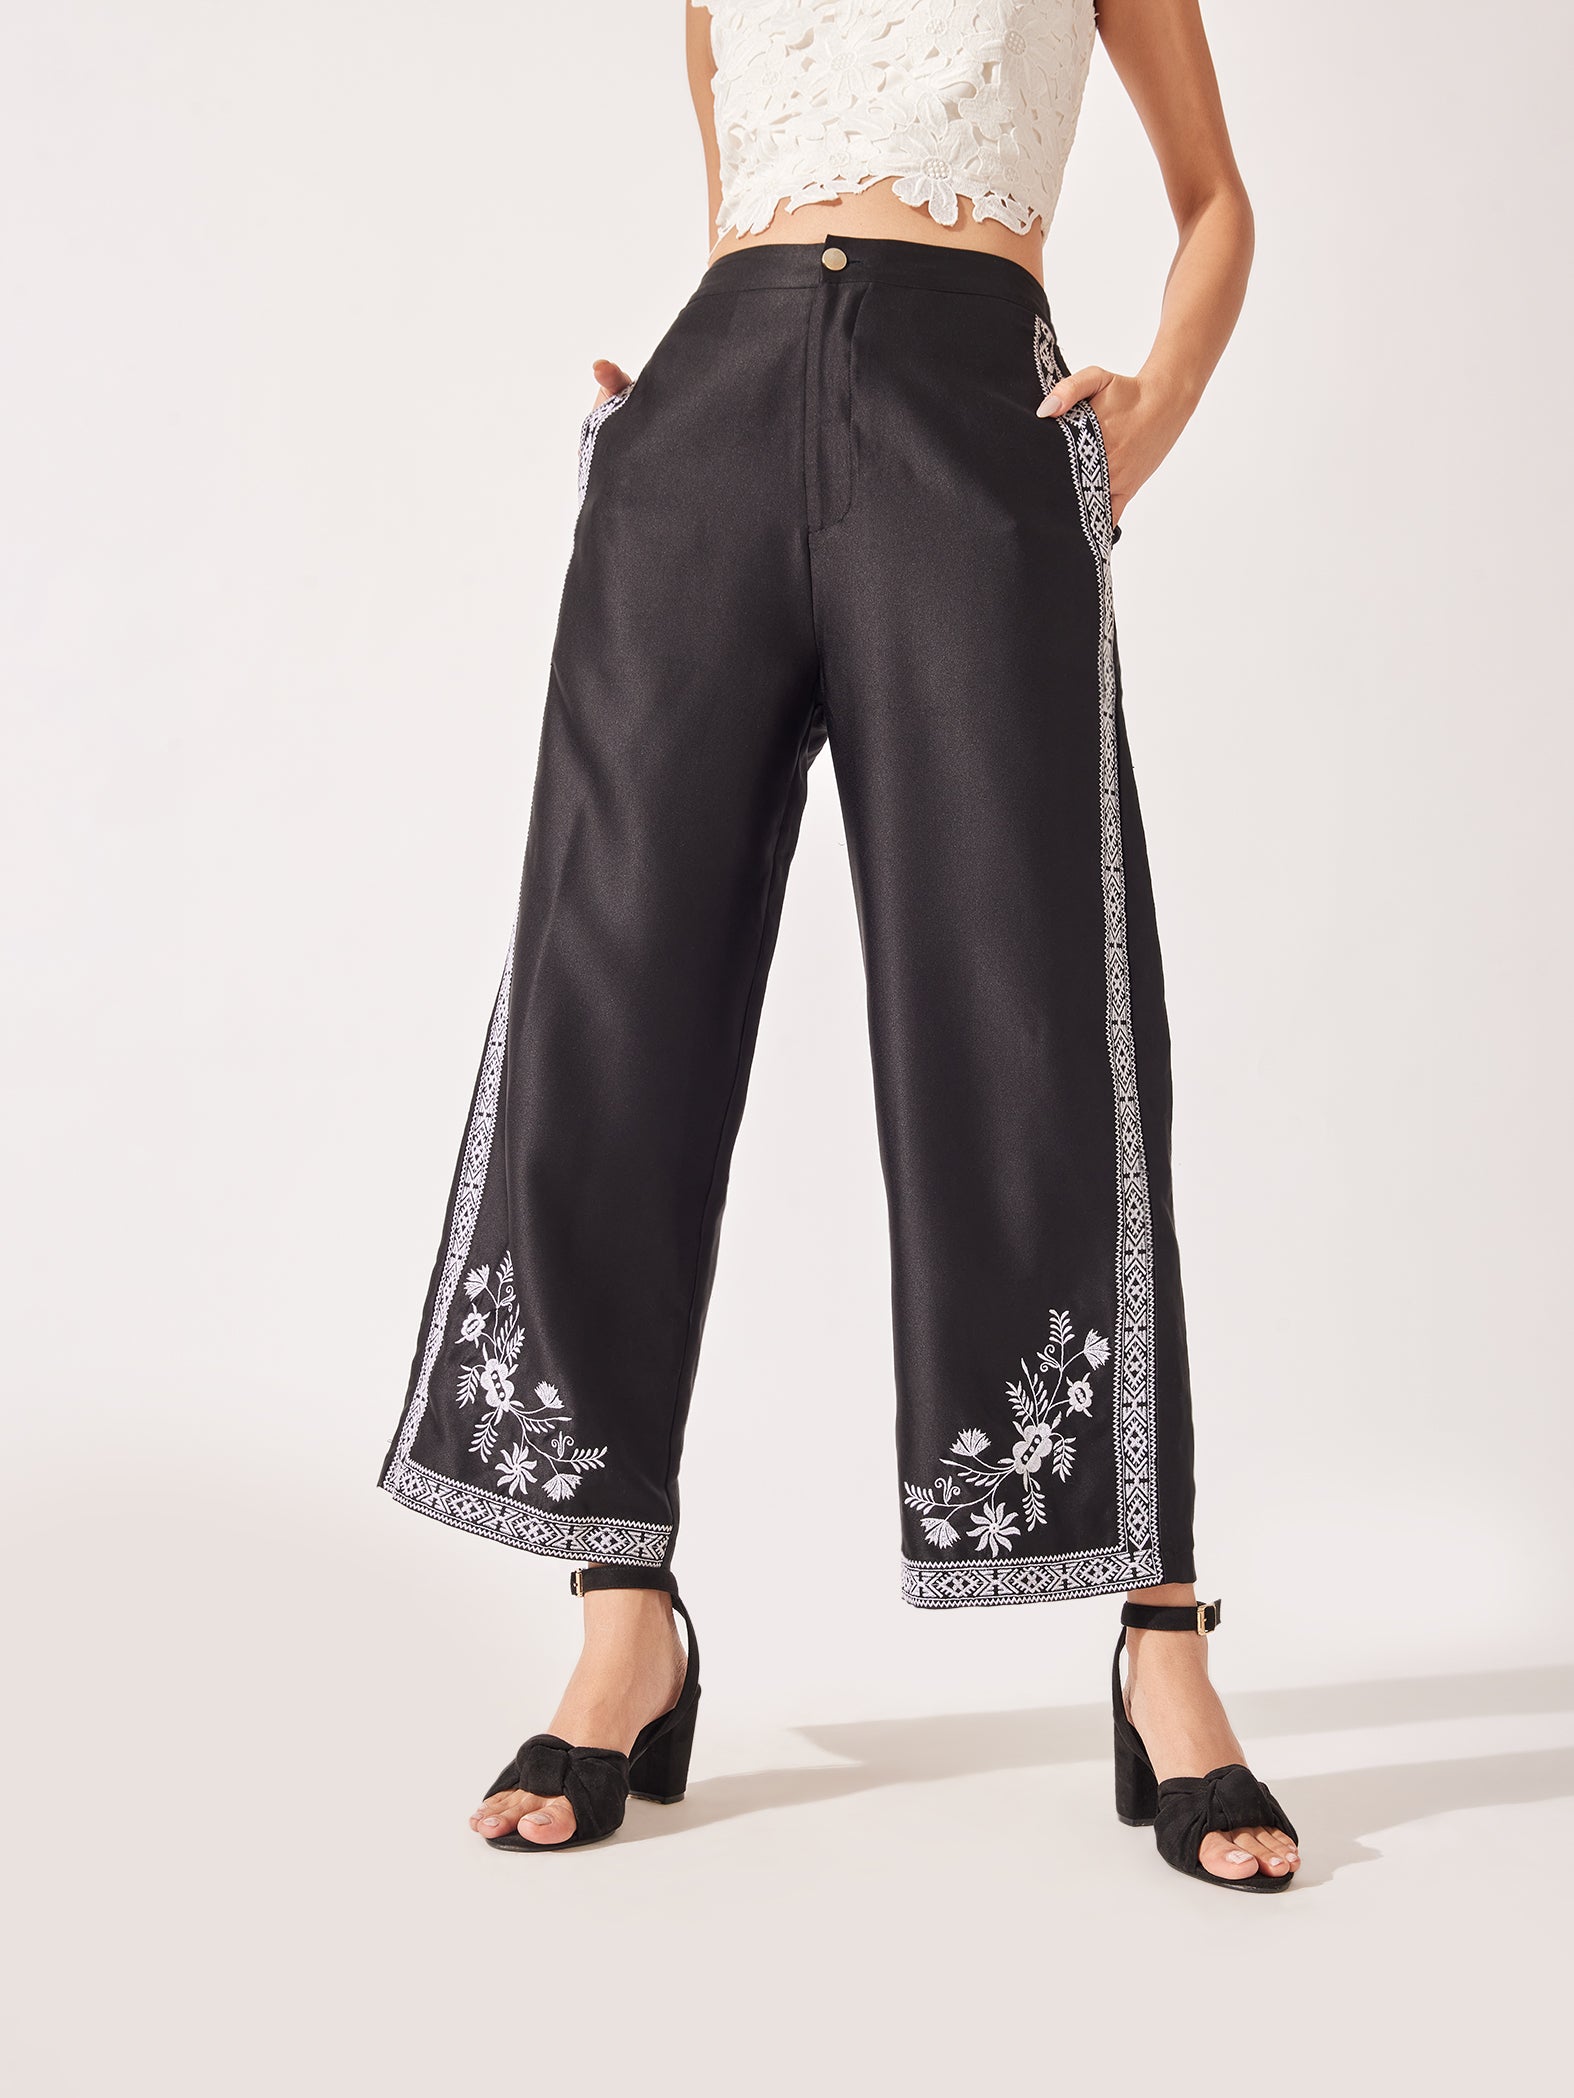 Buy Black Floral Embroidered Pants Online